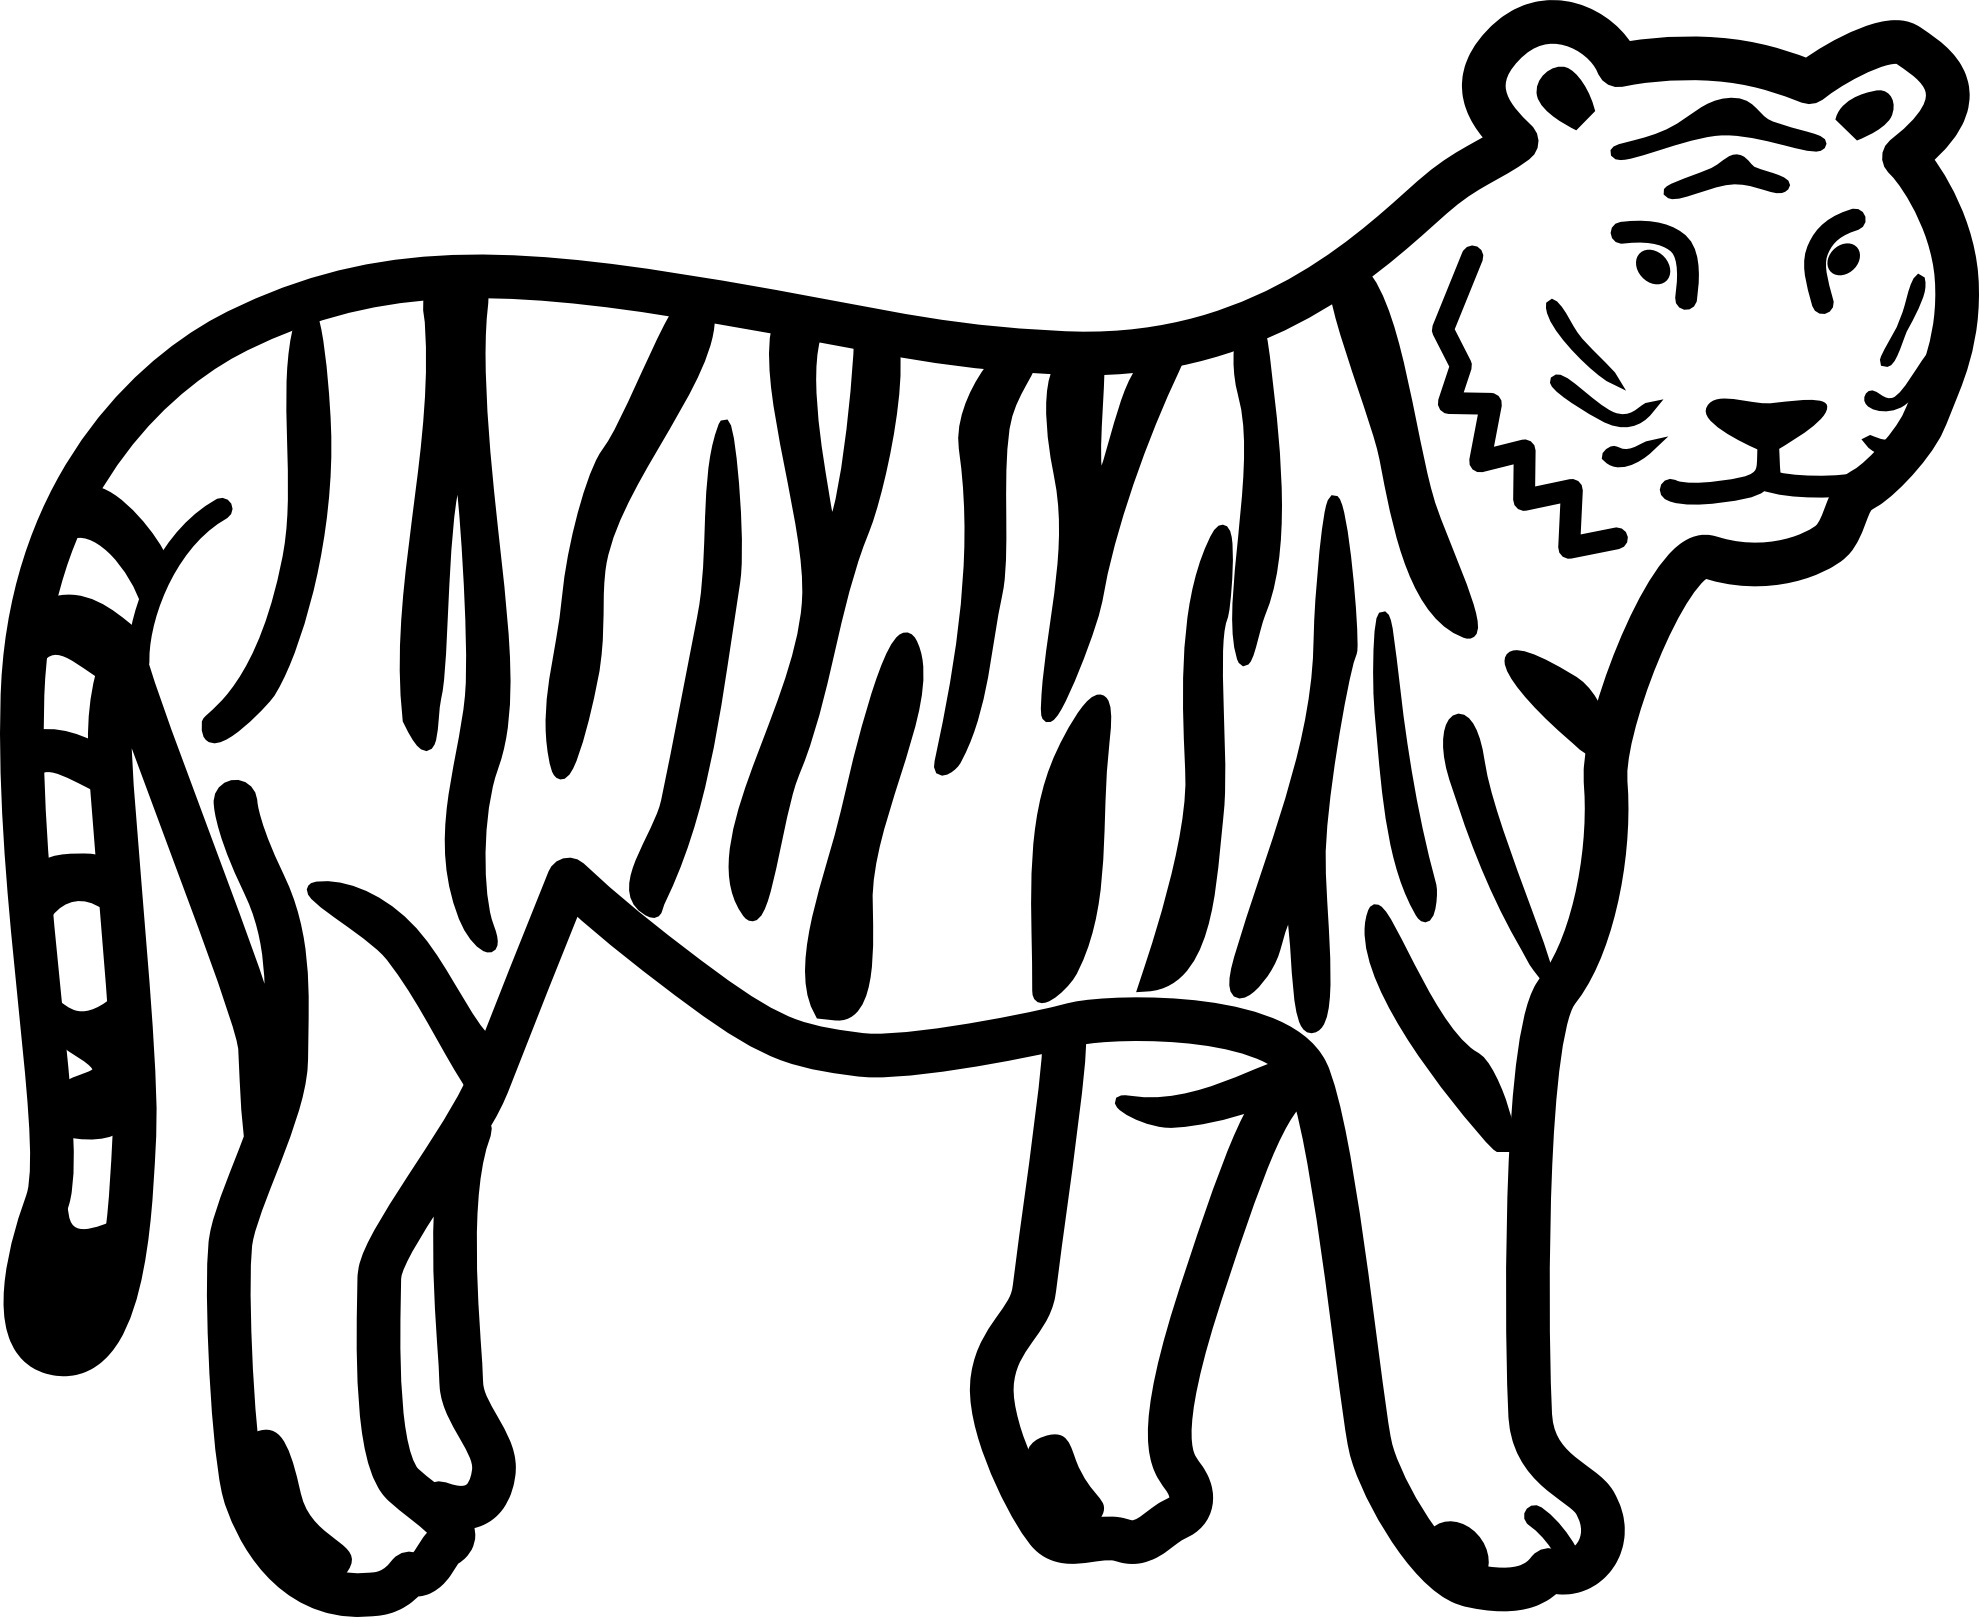 Colour pencil drawing of a Sumatran tiger by UK artist Gary Tymon